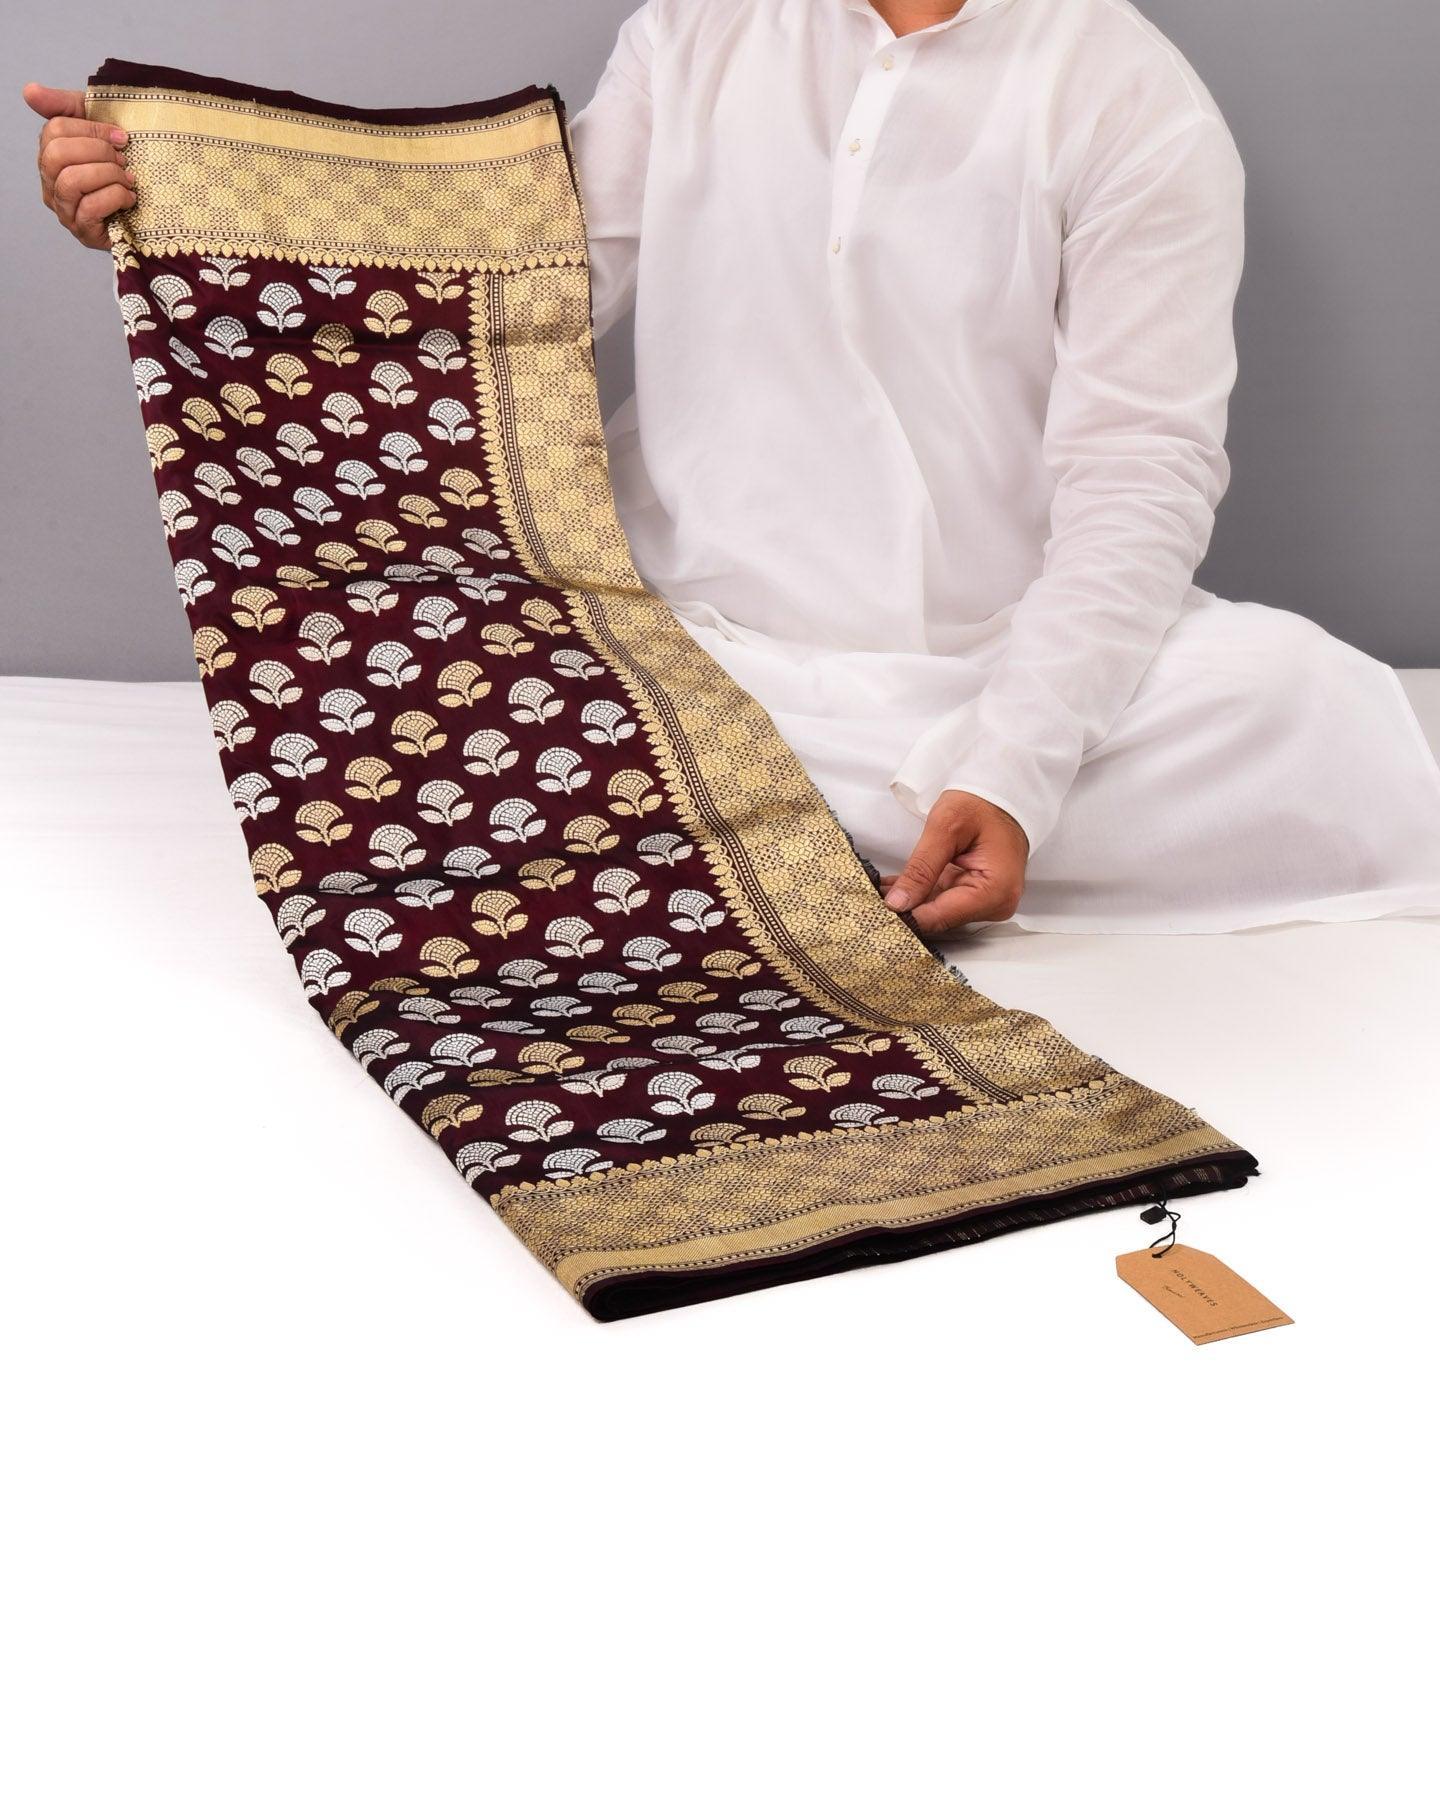 Mahogany Banarasi Alfi Sona Rupa Kadhuan Brocade Handwoven Katan Silk Saree - By HolyWeaves, Benares